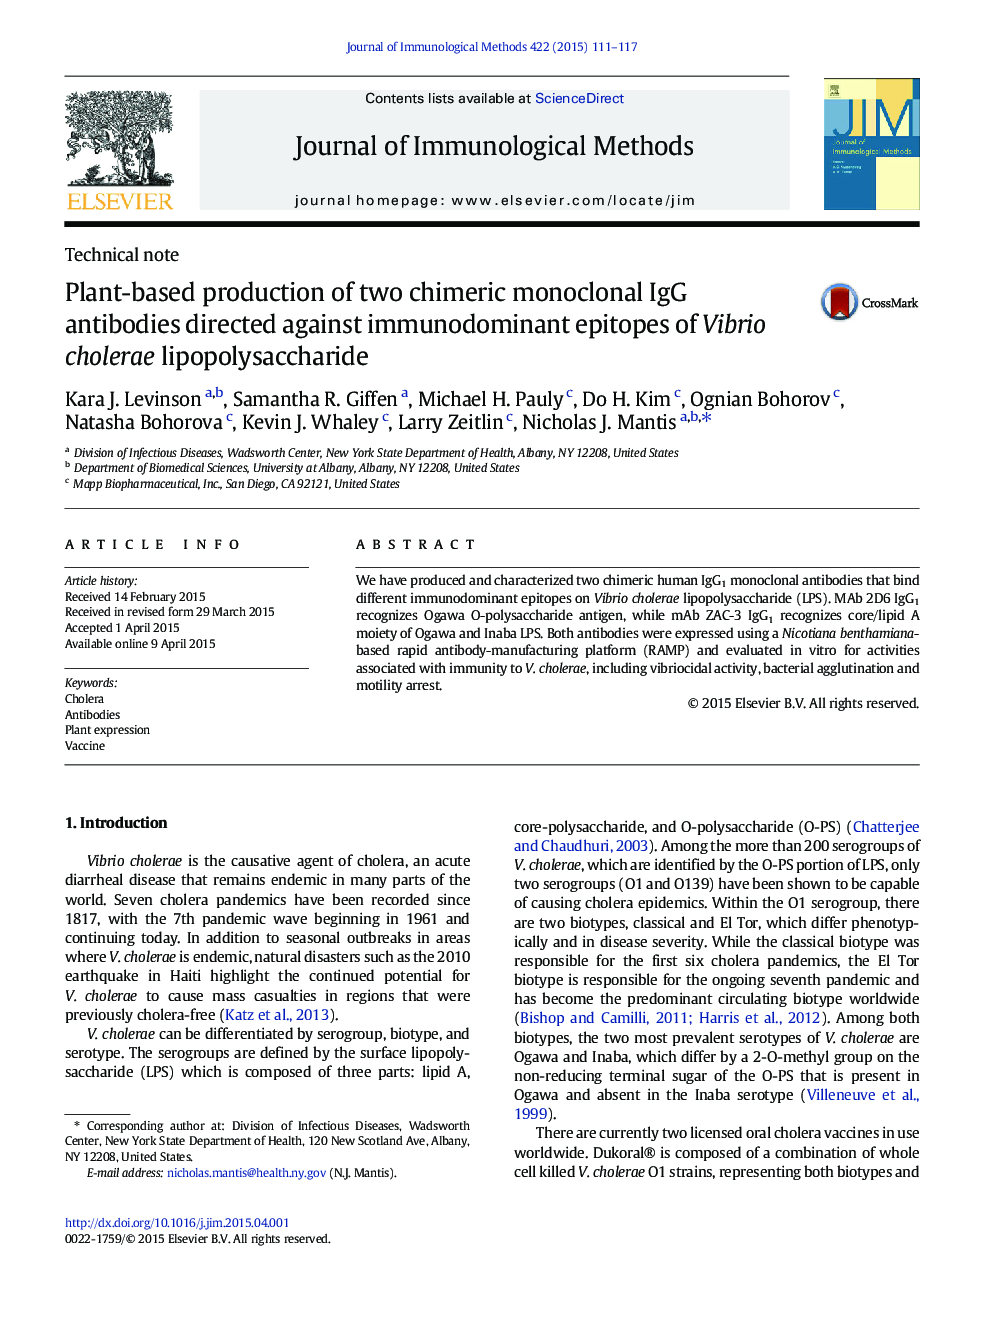 Plant-based production of two chimeric monoclonal IgG antibodies directed against immunodominant epitopes of Vibrio cholerae lipopolysaccharide